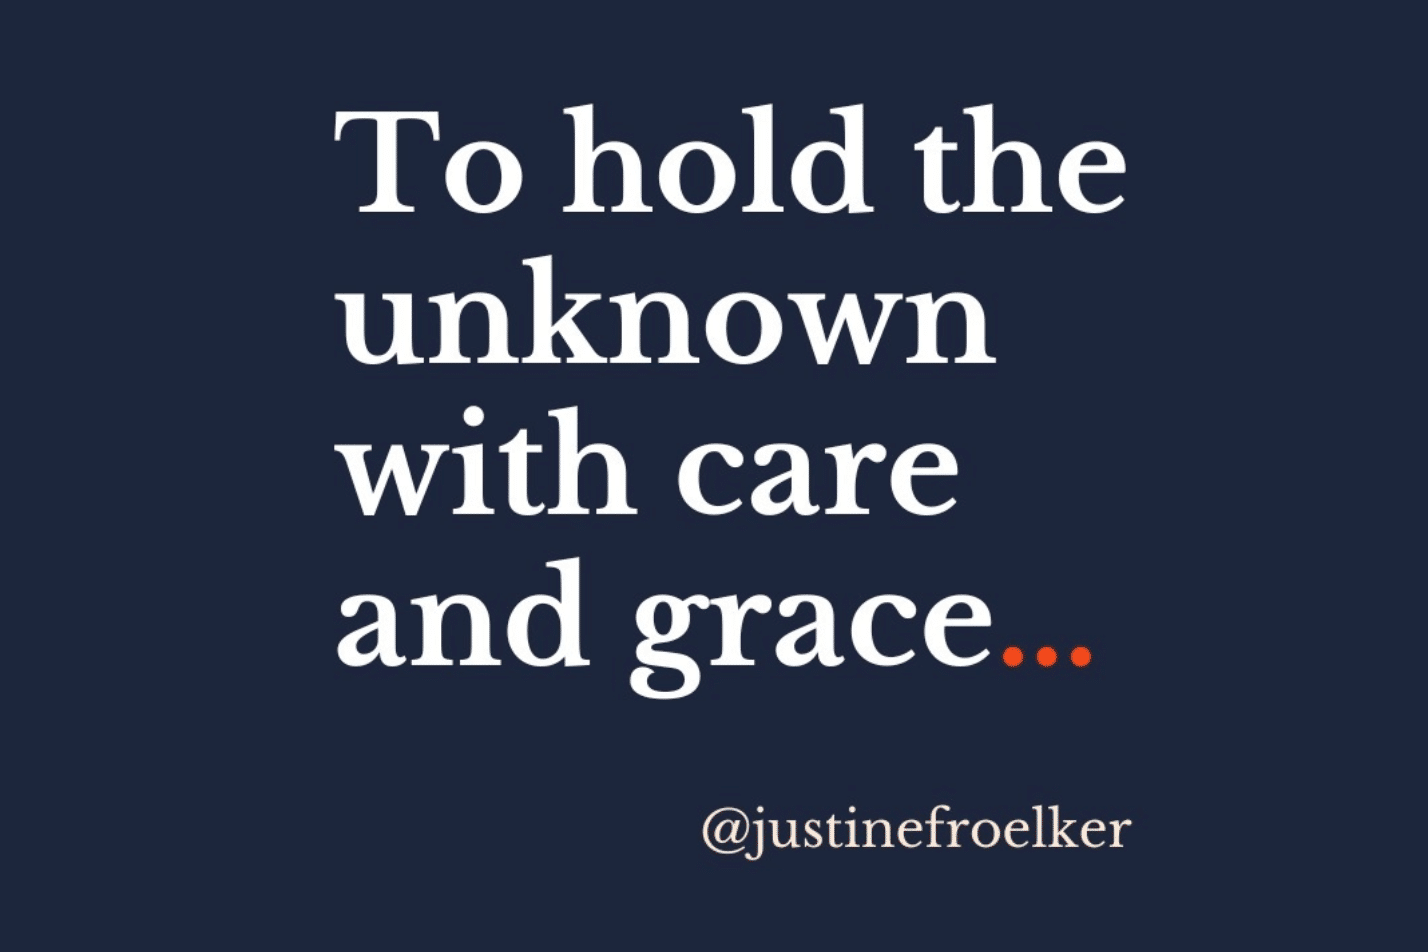 Justine Froelker - Mental Health Motivational Speaker - Quote